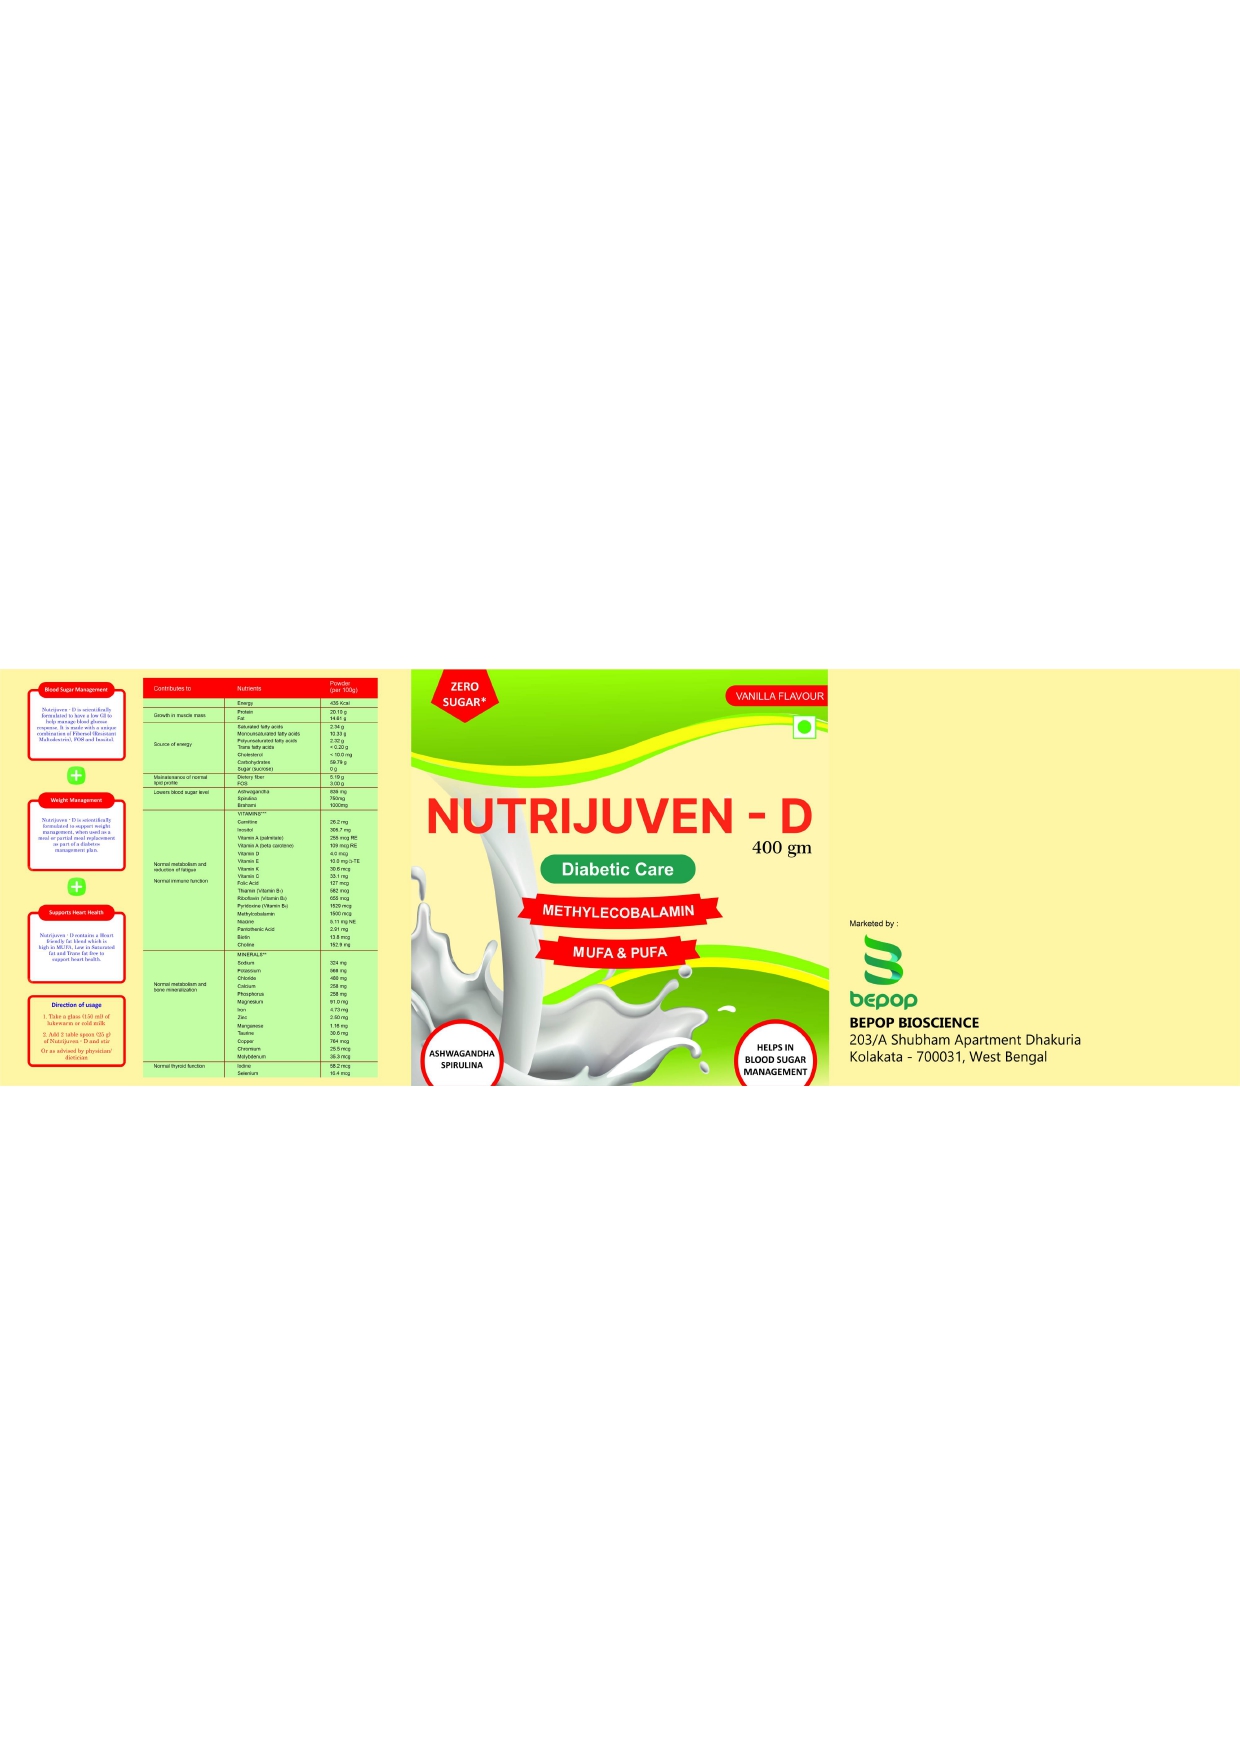 Buy Nutrijuven-D I Diabetic Care at Best Price Online